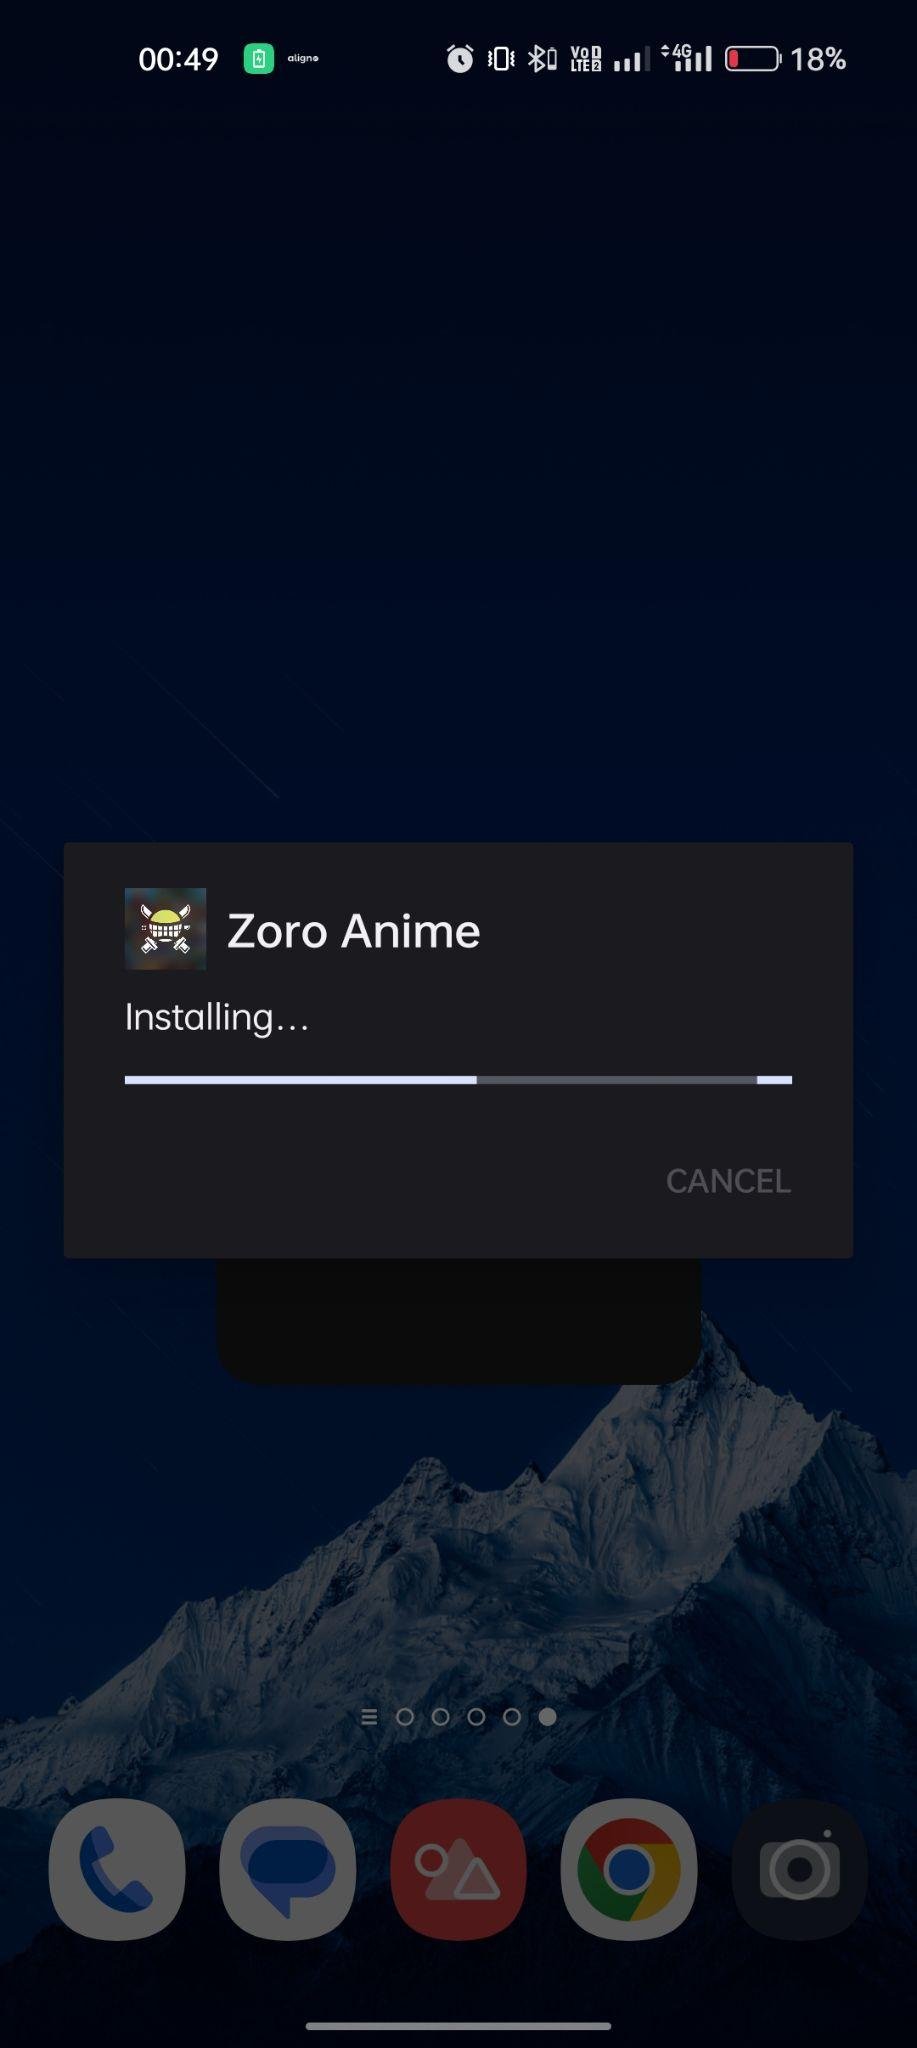 Zoro.to apk installing